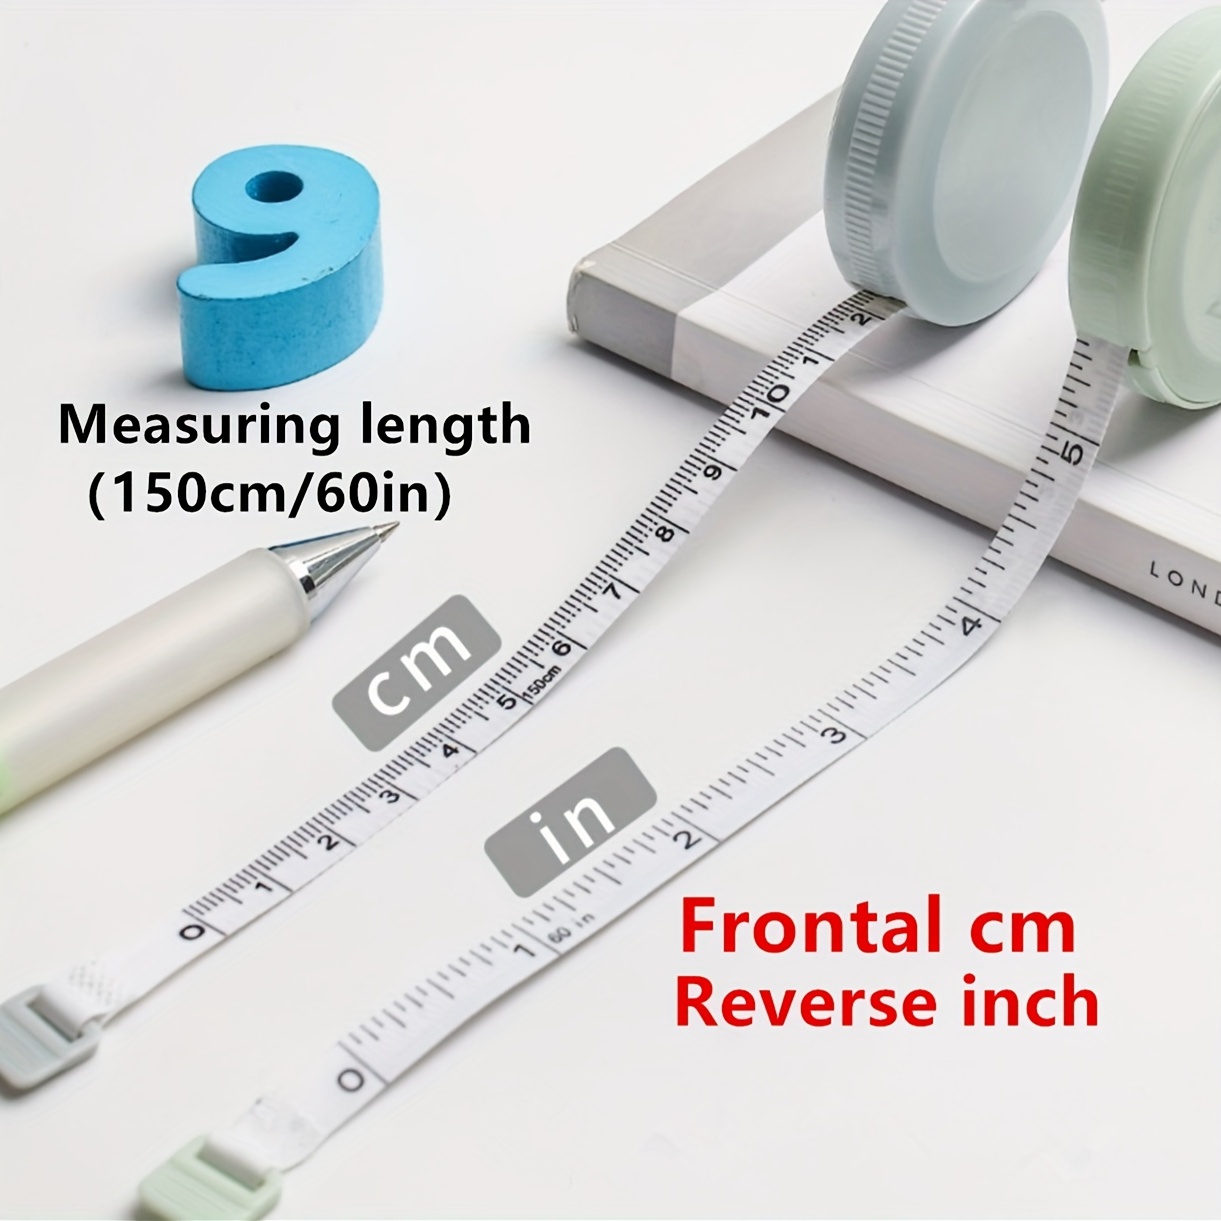 Gift Tape Measure 1 Meter Small Steel Tape Measure Pull - Temu